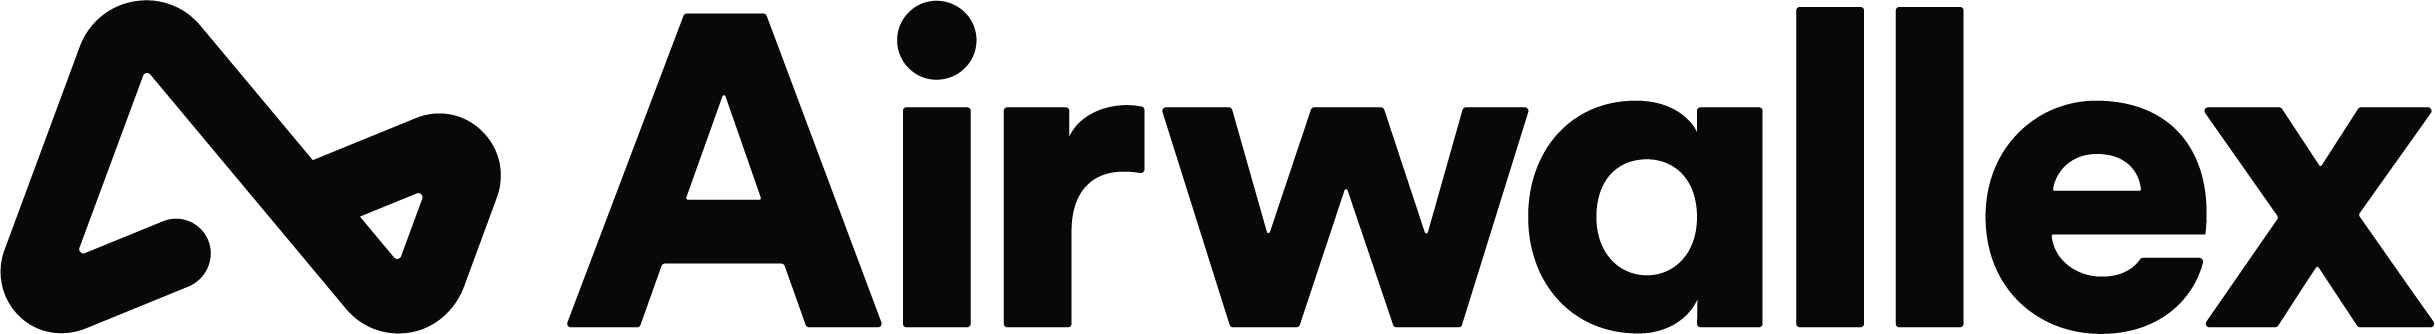 Airwallex Logo - Mono Black